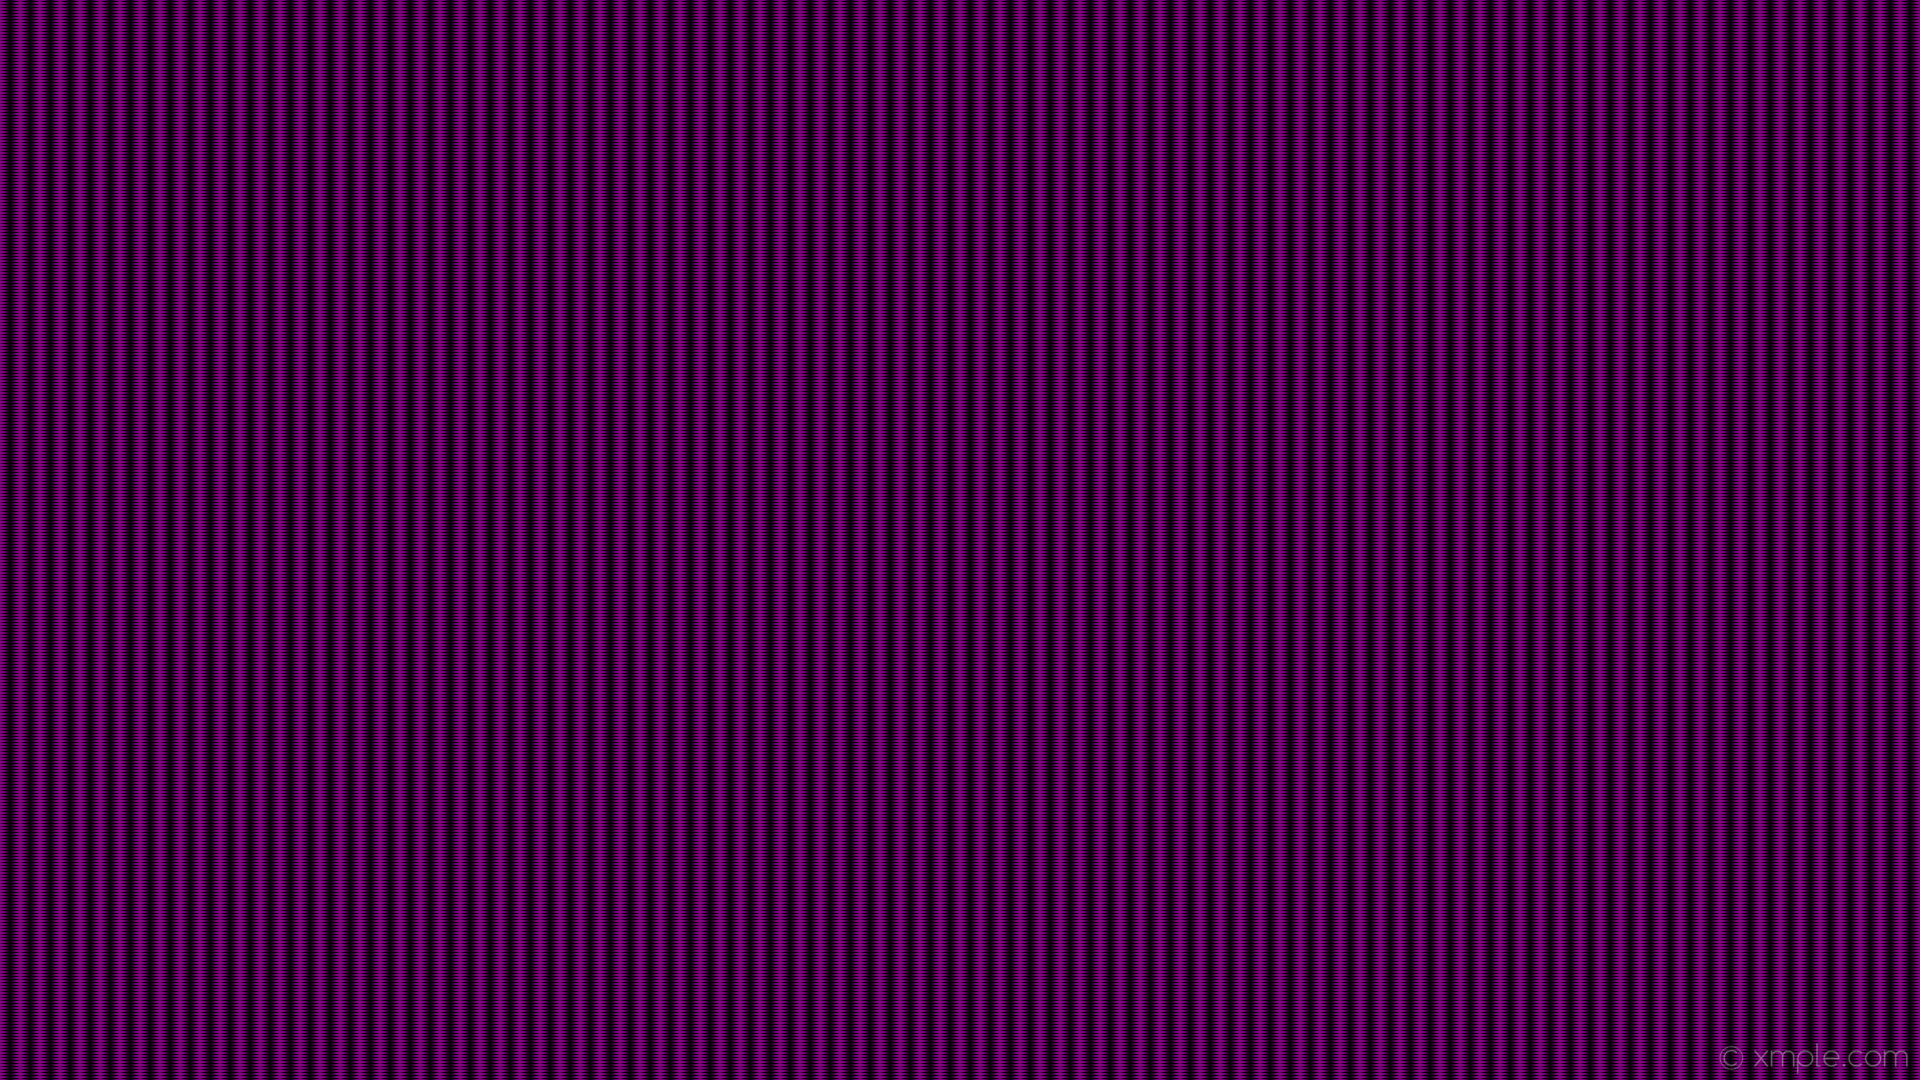 1920x1080 wallpaper lozenge black rhombus diamond purple #800080 #000000 0Â° 20px 3px